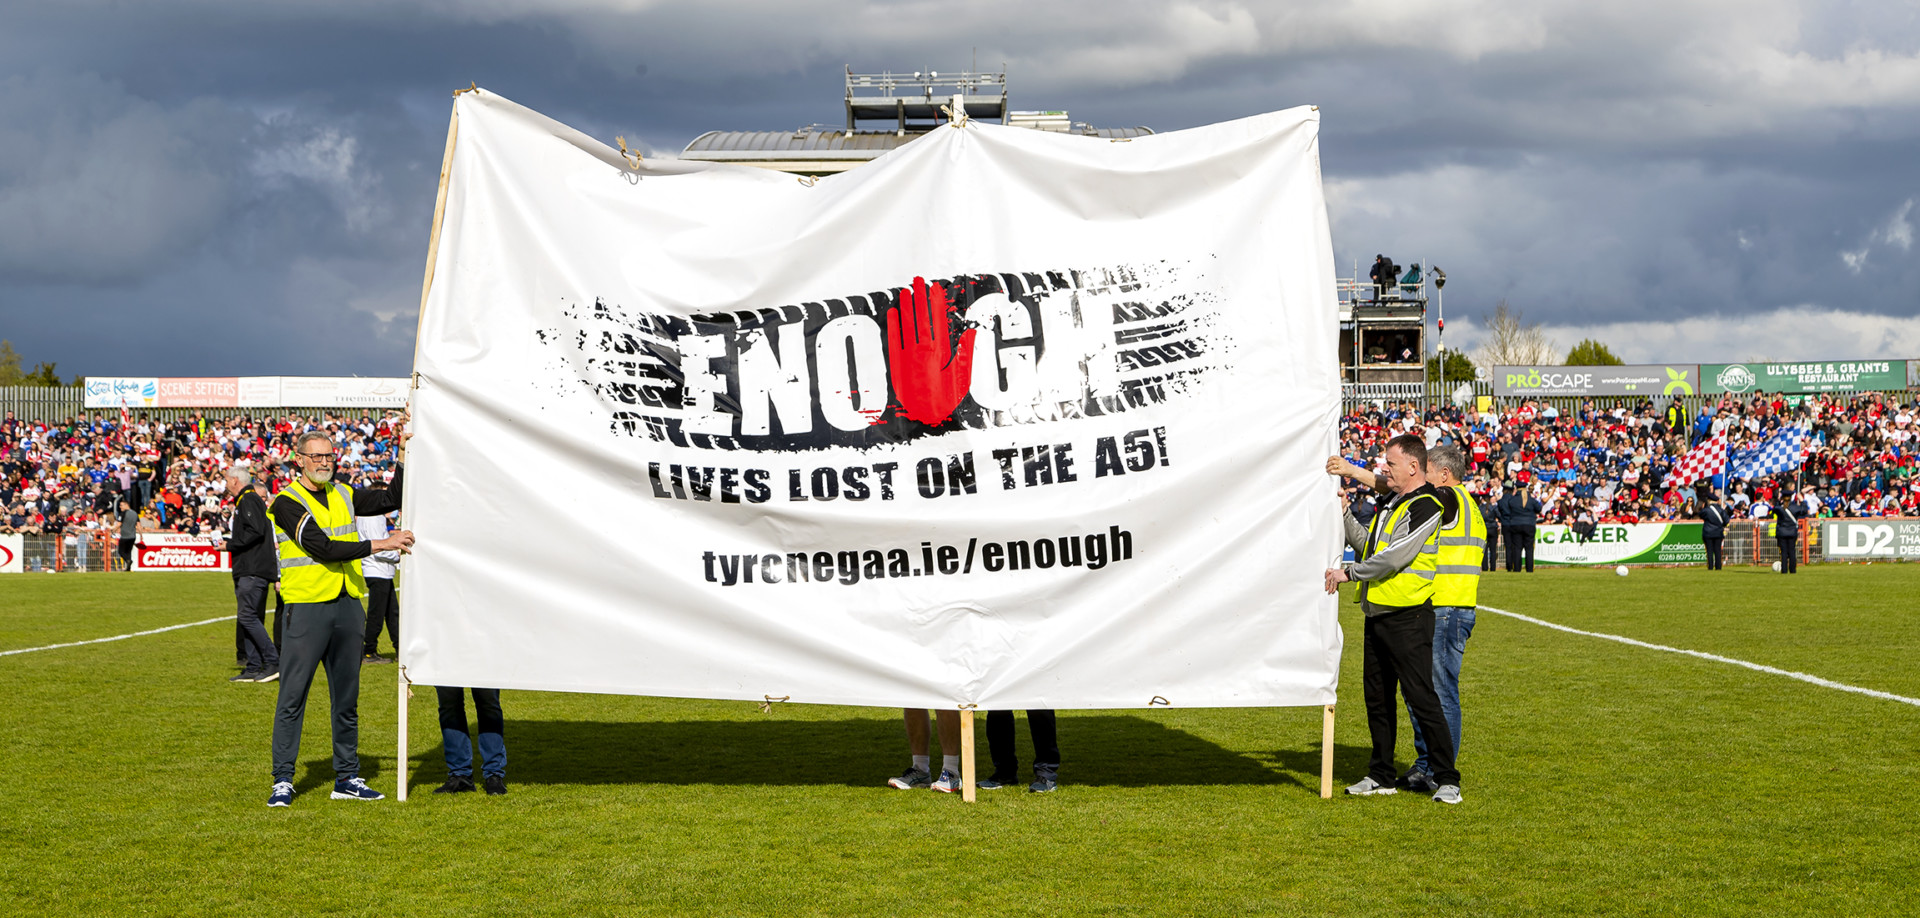 New Tyrone GAA lobby group ‘heartbroken’ by latest A5 tragedy